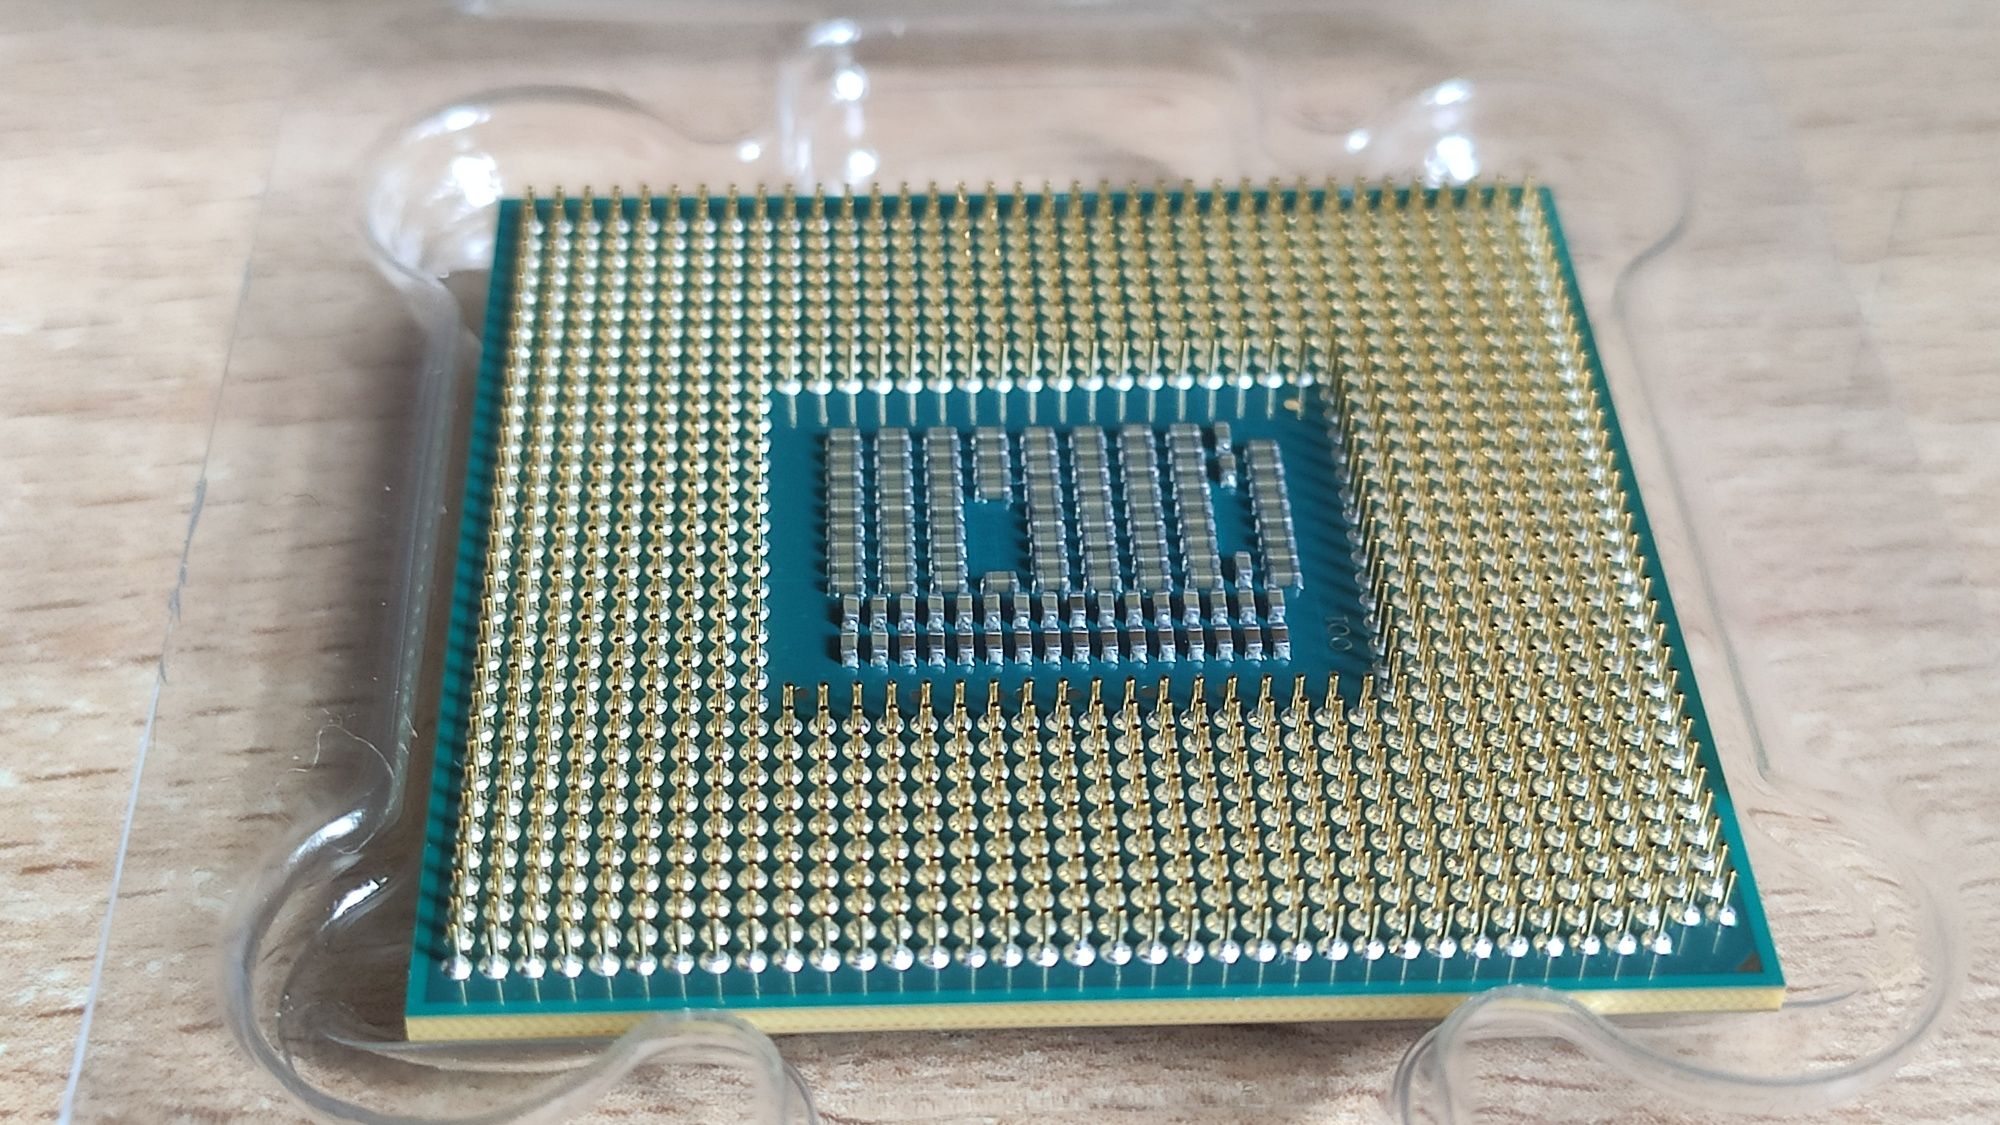 Intel core i7 3540m